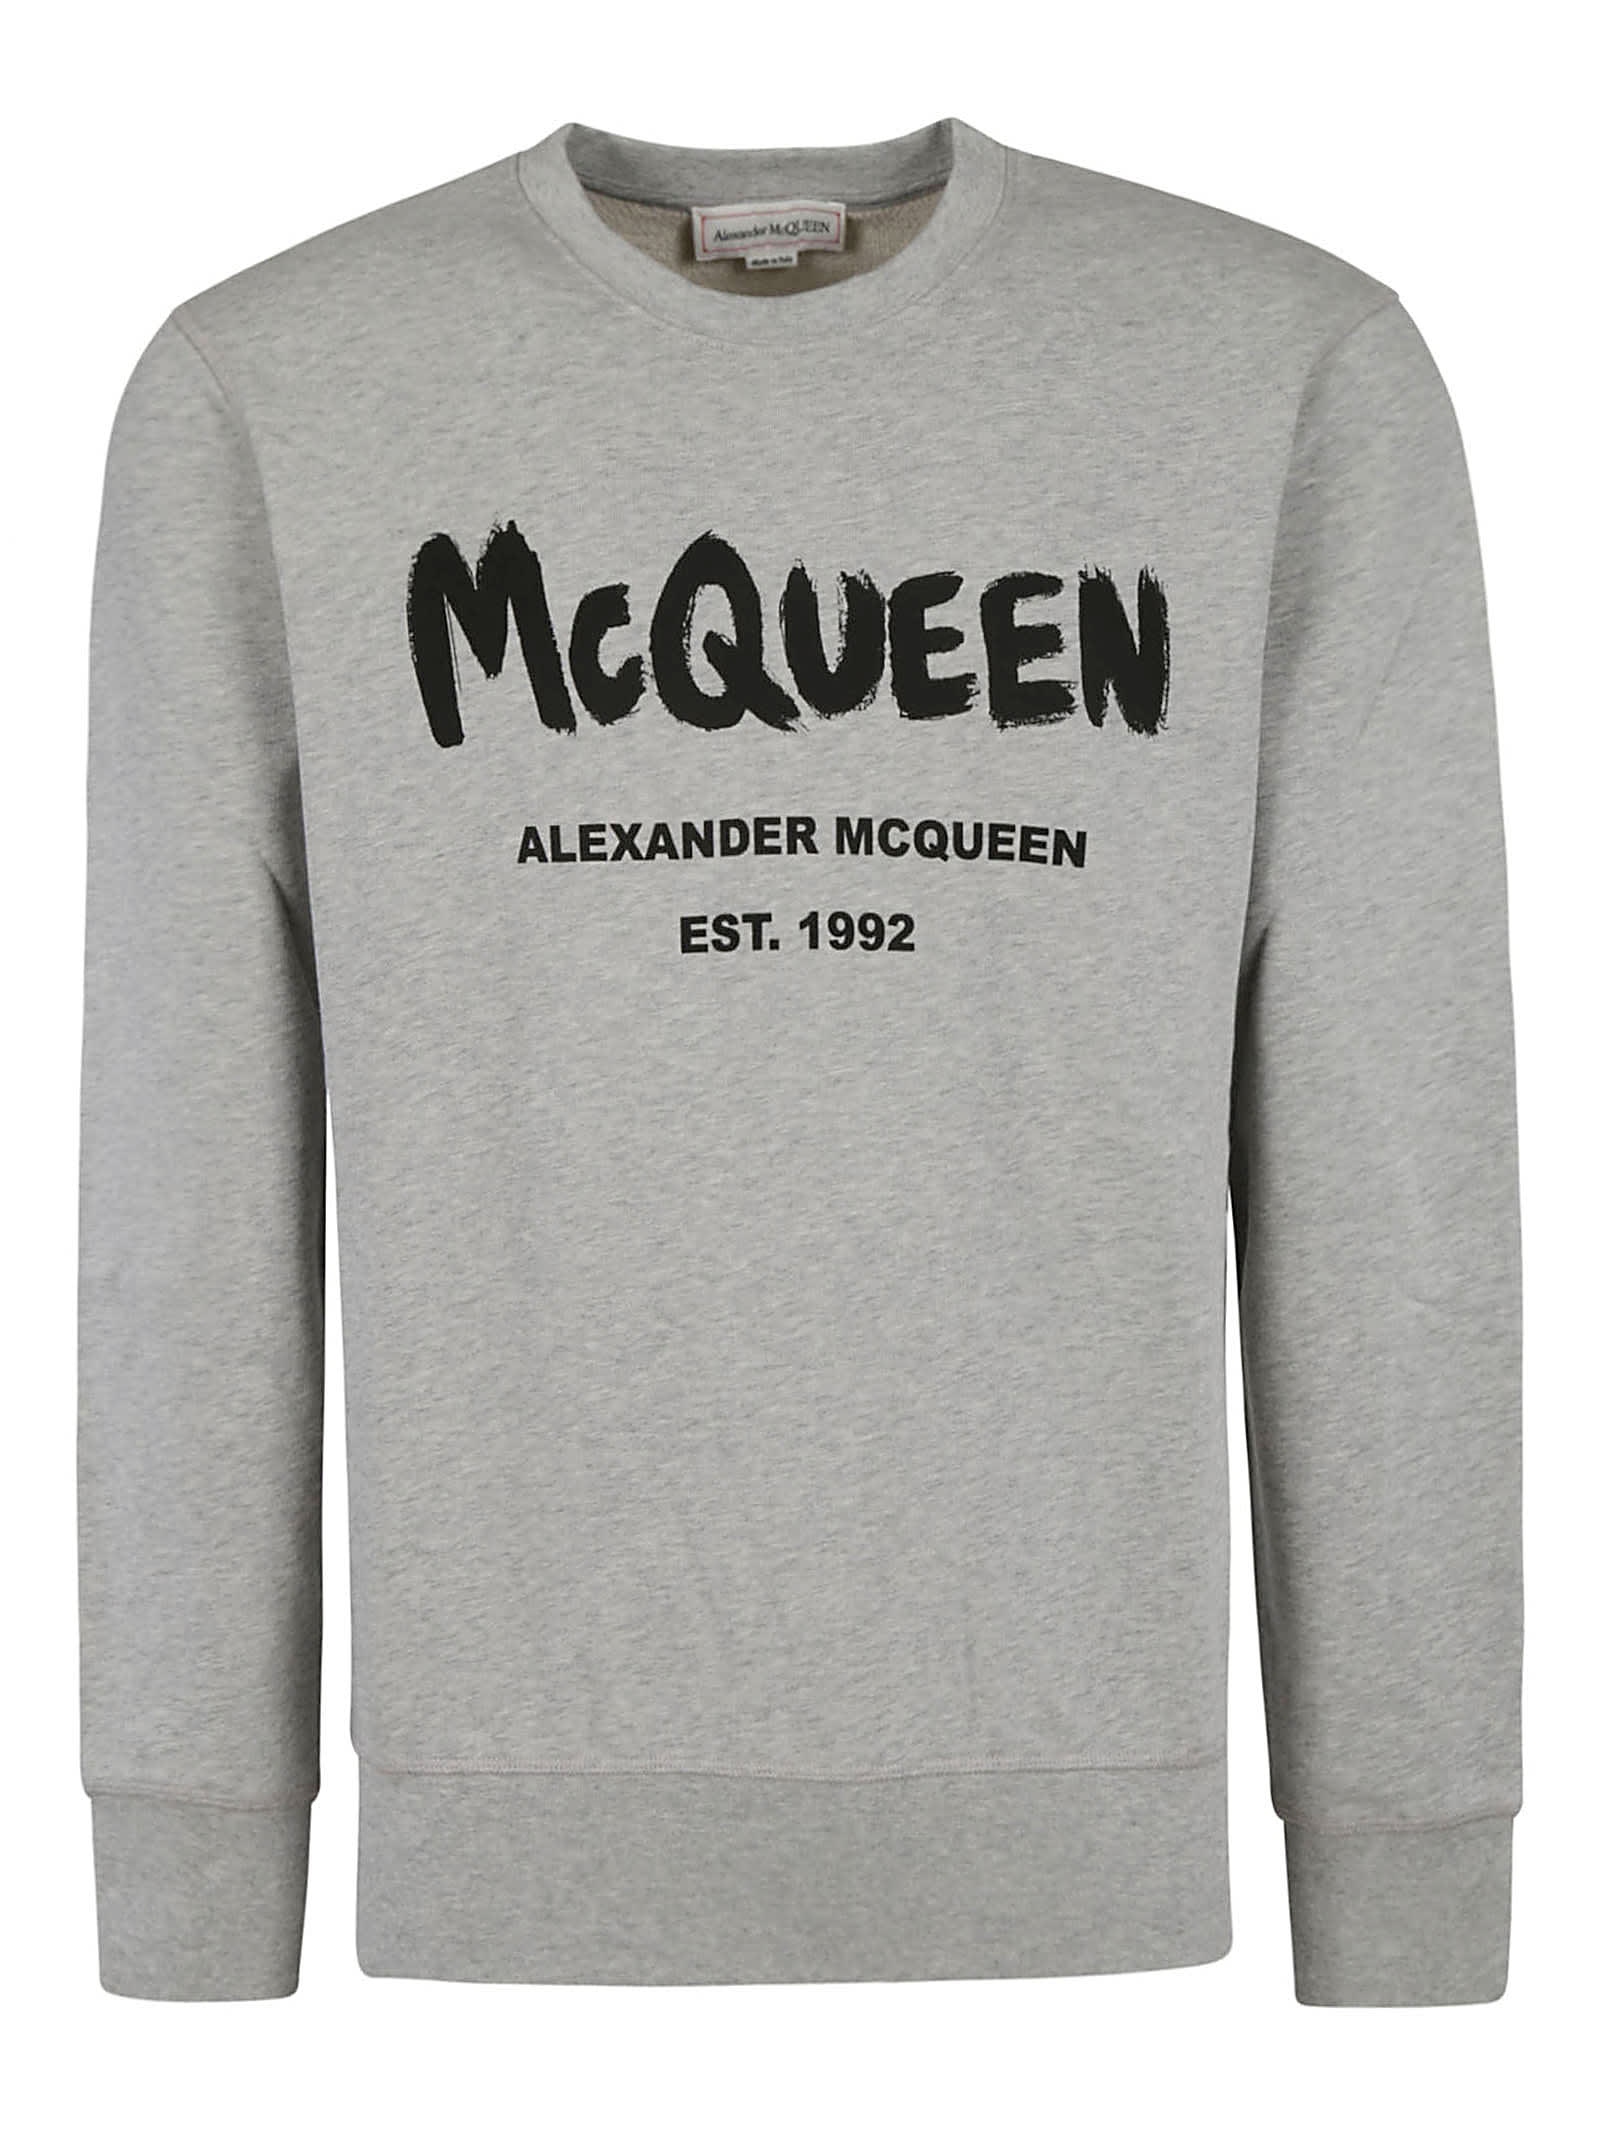 Alexander McQueen Graffiti Print Sweatshirt